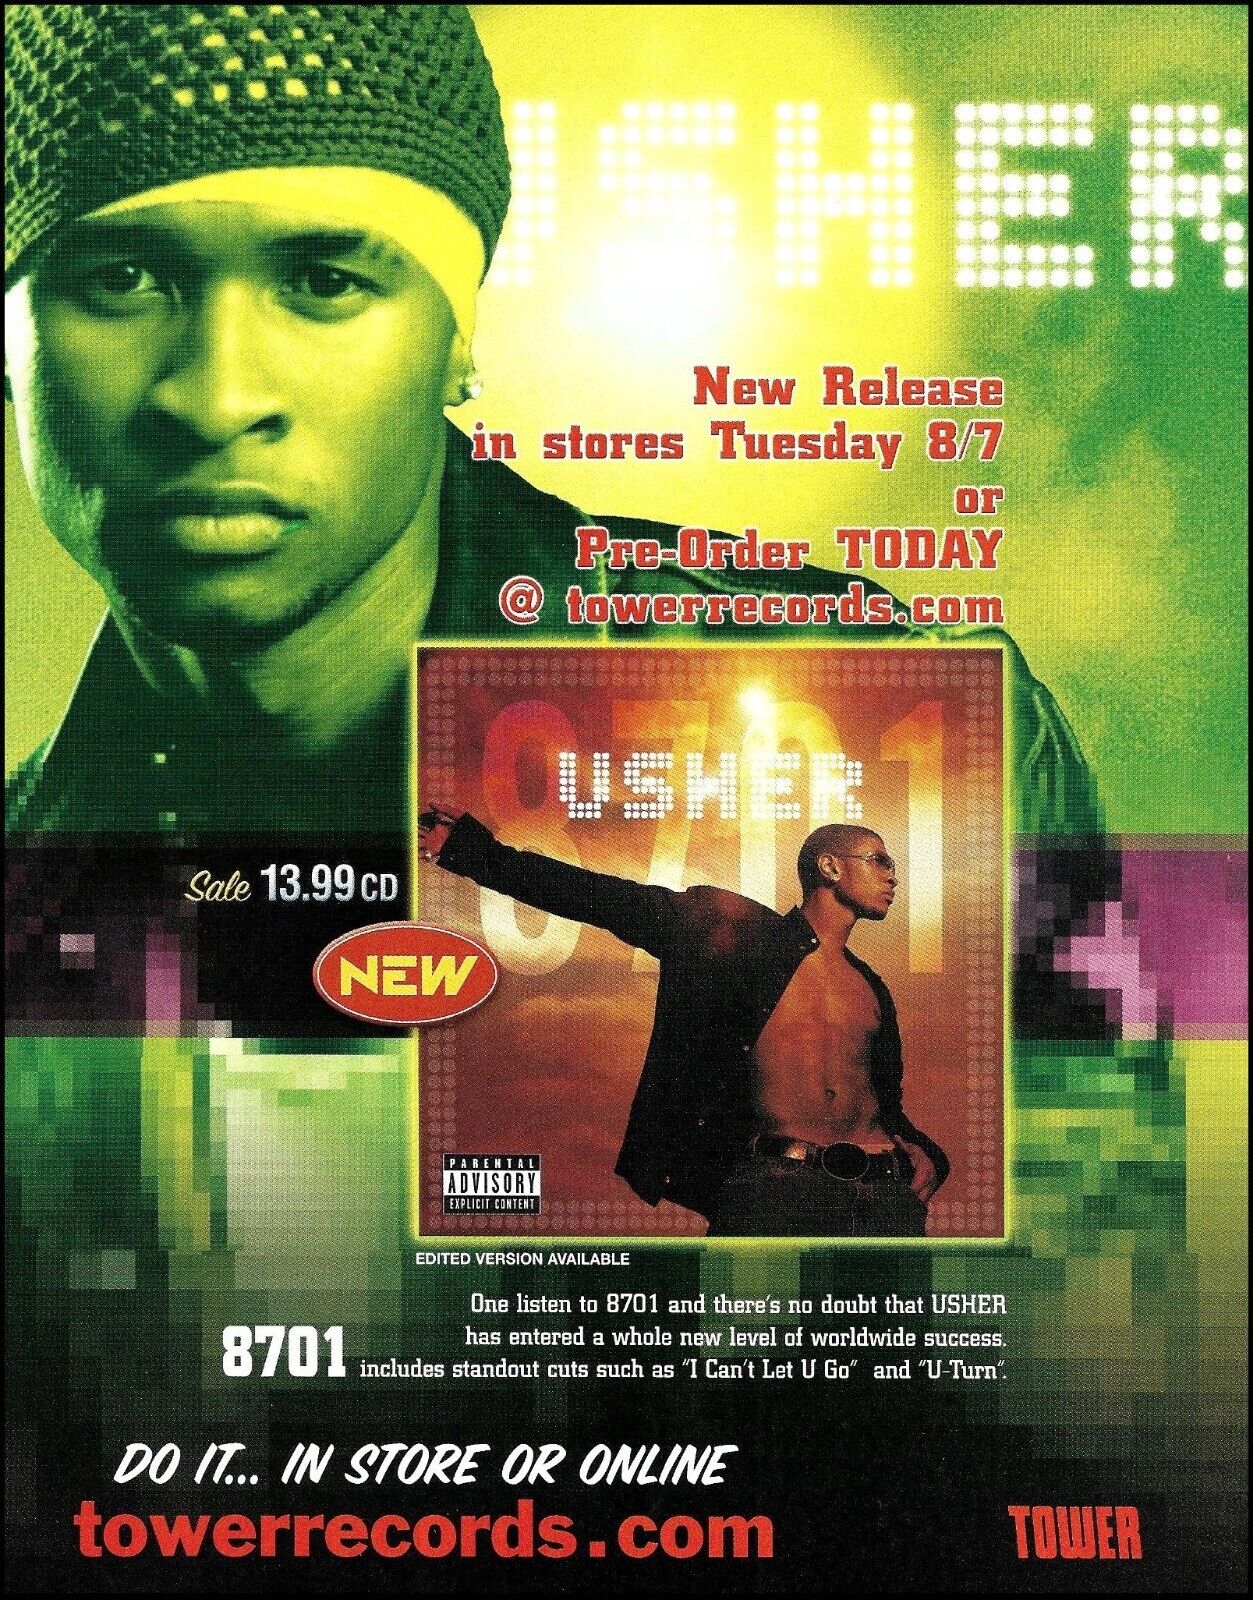 Usher 8701 Tower Records album advertisement 2001 R&B Singer 8 x 11 ad print